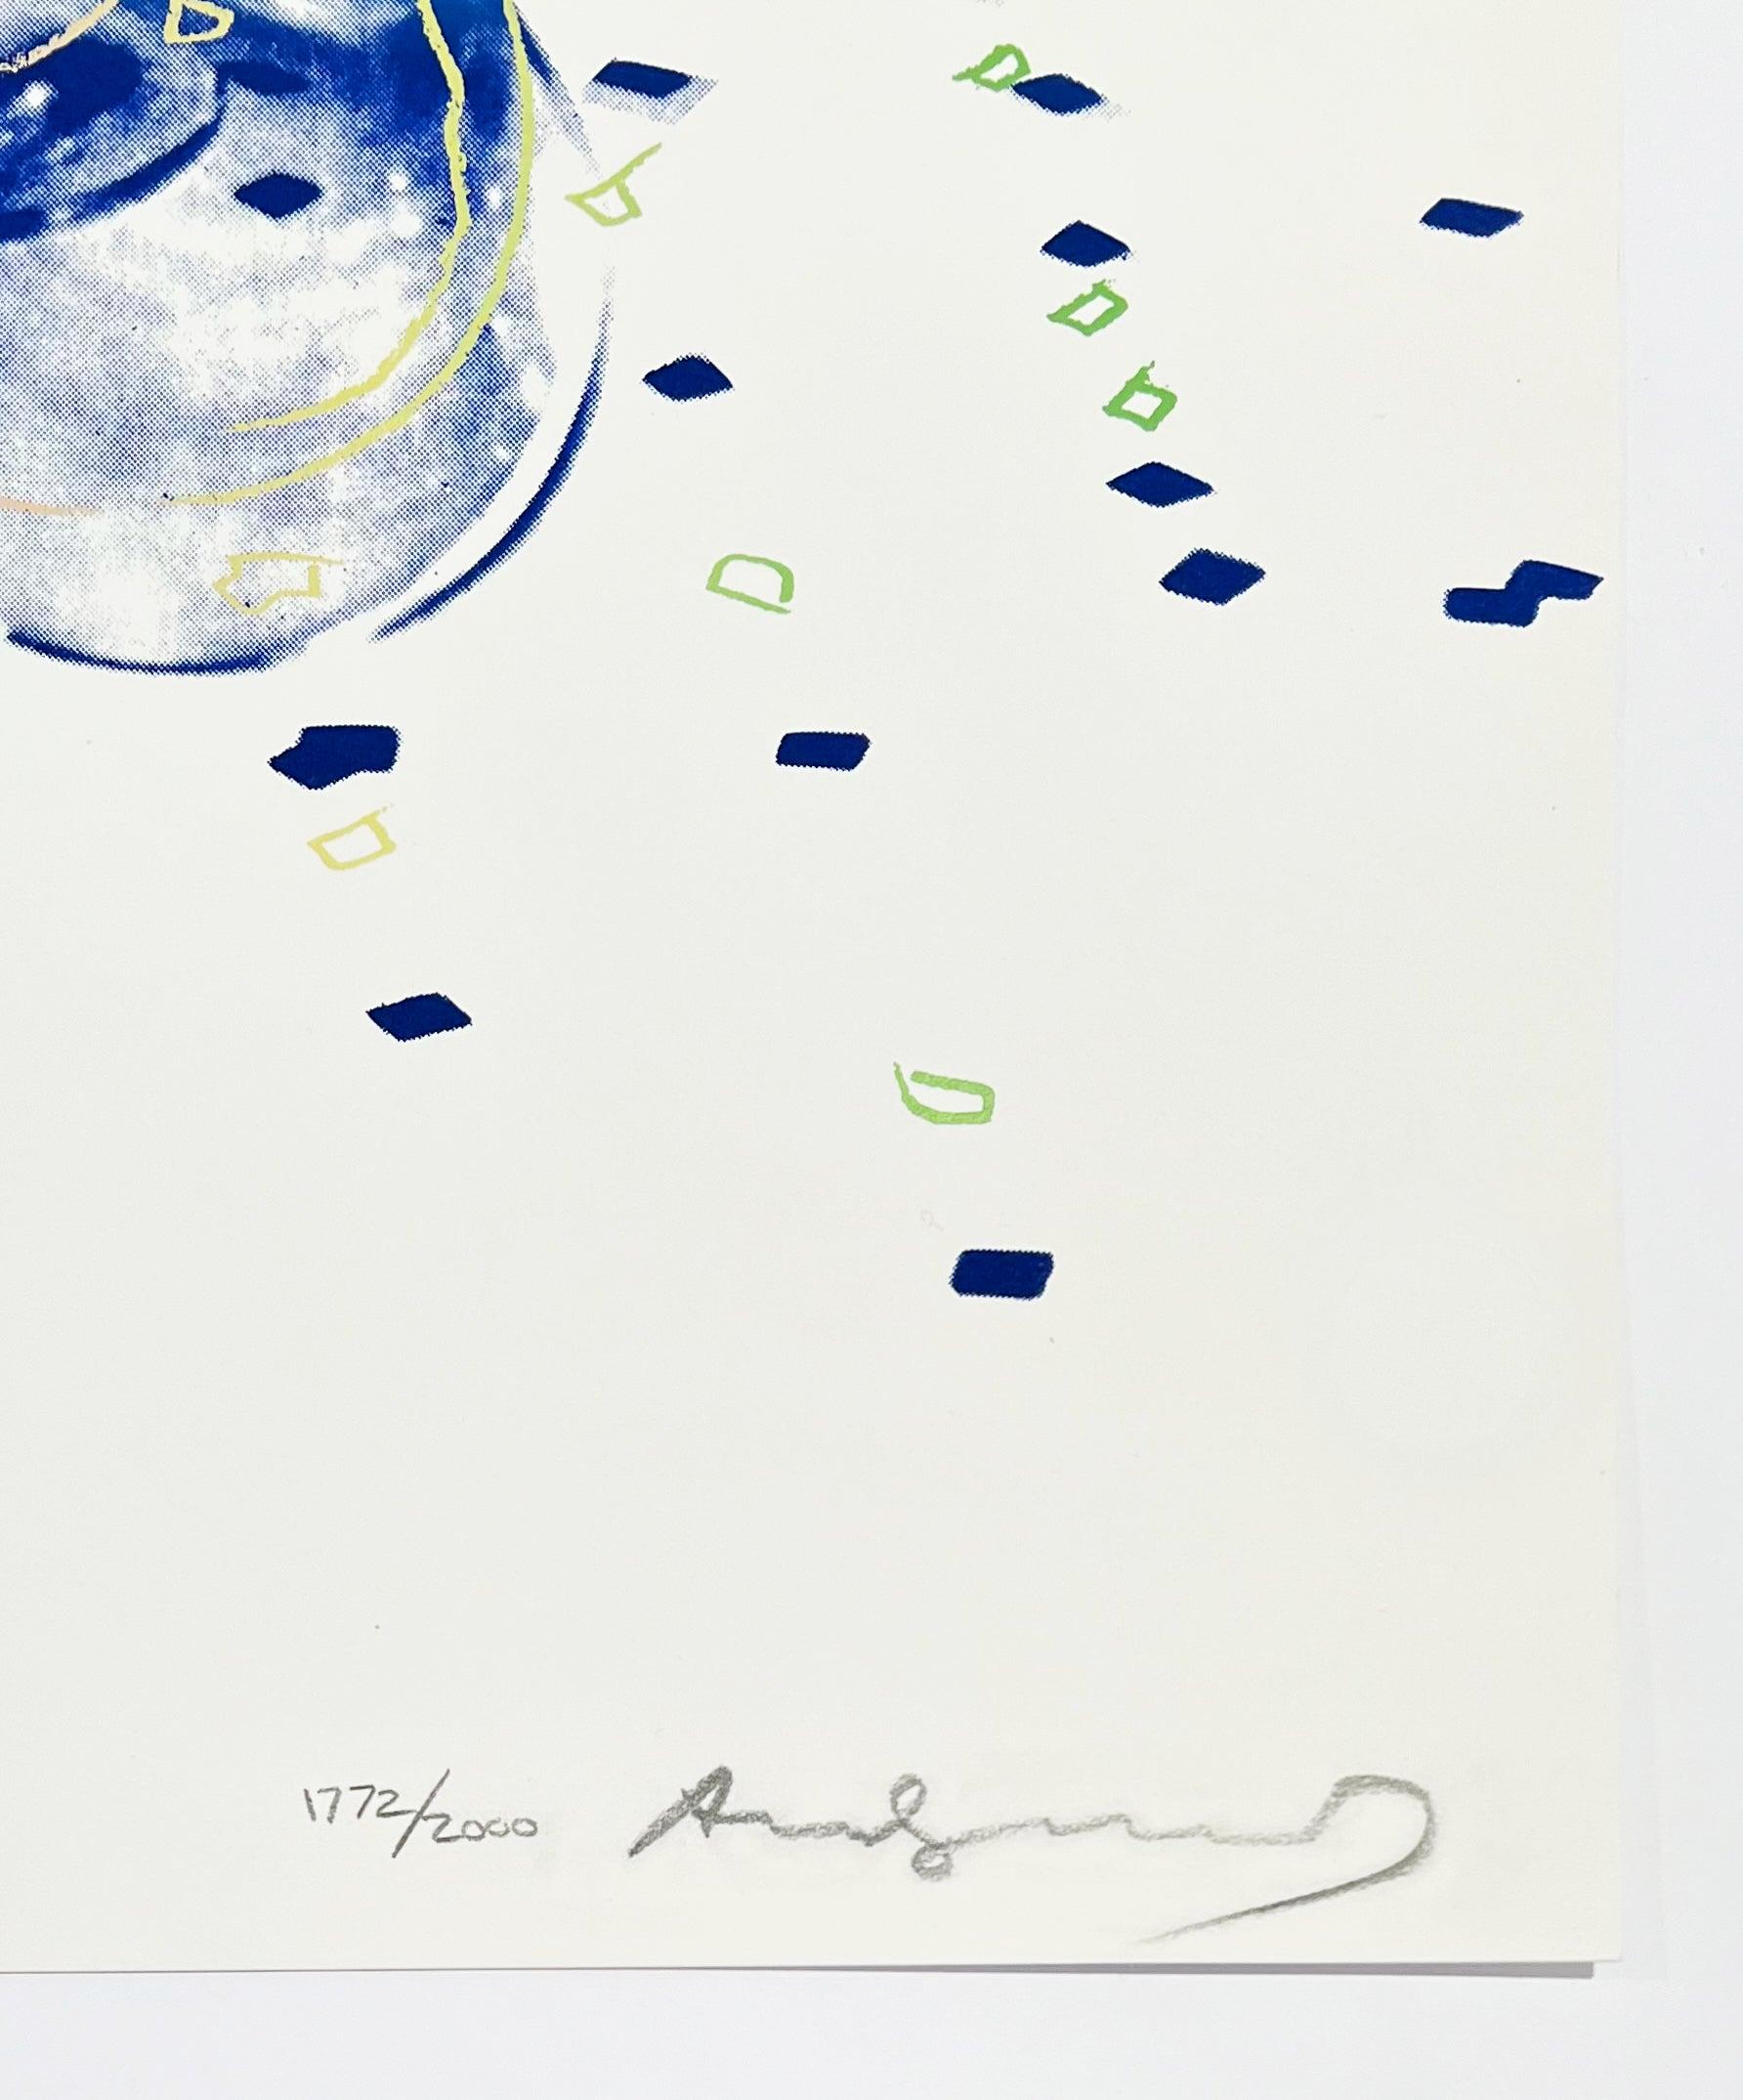 Artist: Andy Warhol
Title: Committee 2000
Medium: Screenprint on Lenox Museum Board
Date: 1982
Edition: 1772/2000
Frame Size: 37